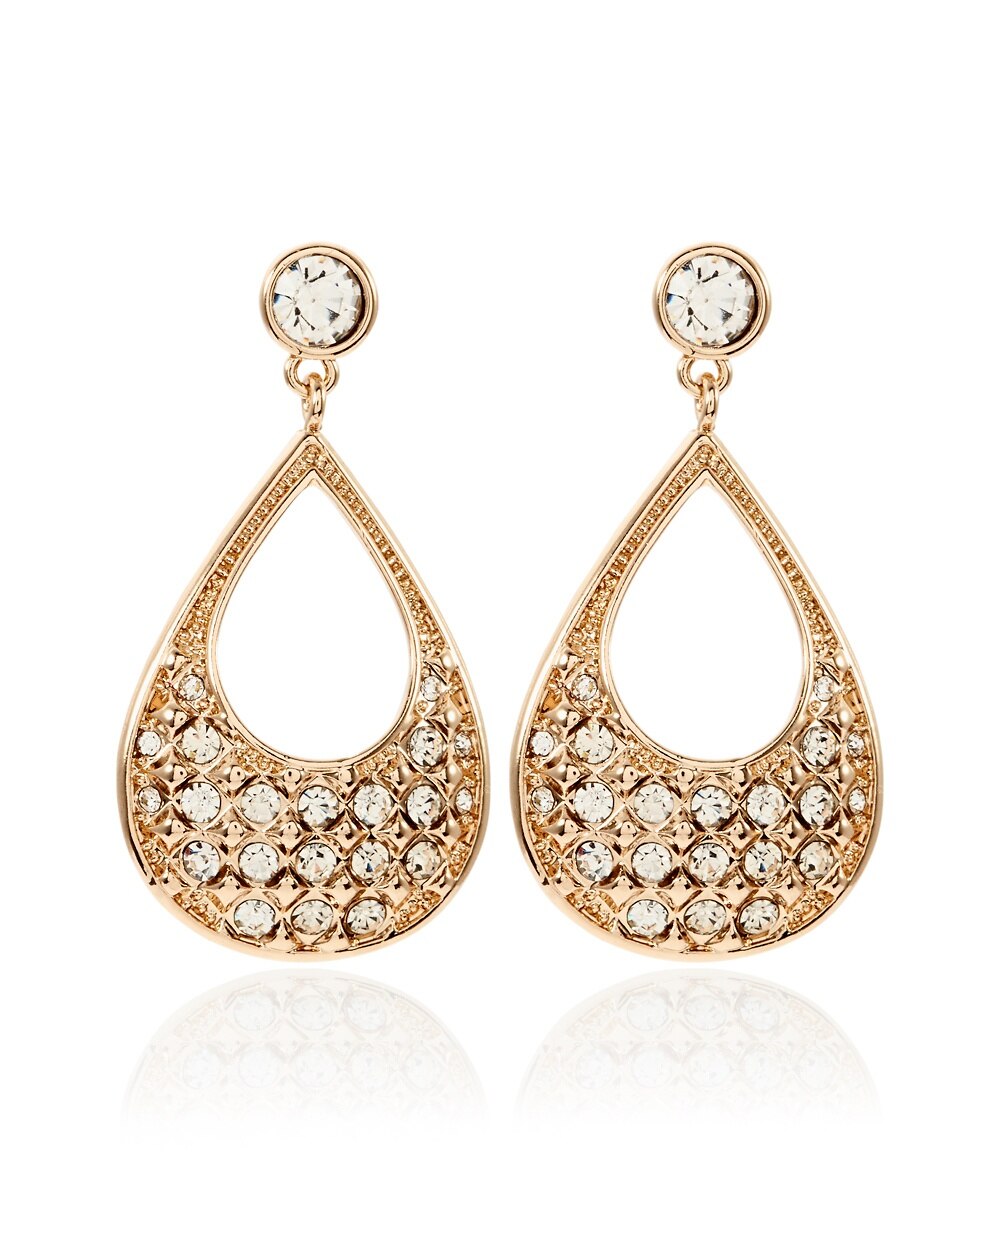 Golden Crystal Pave Teardrop Earrings - White House Black Market